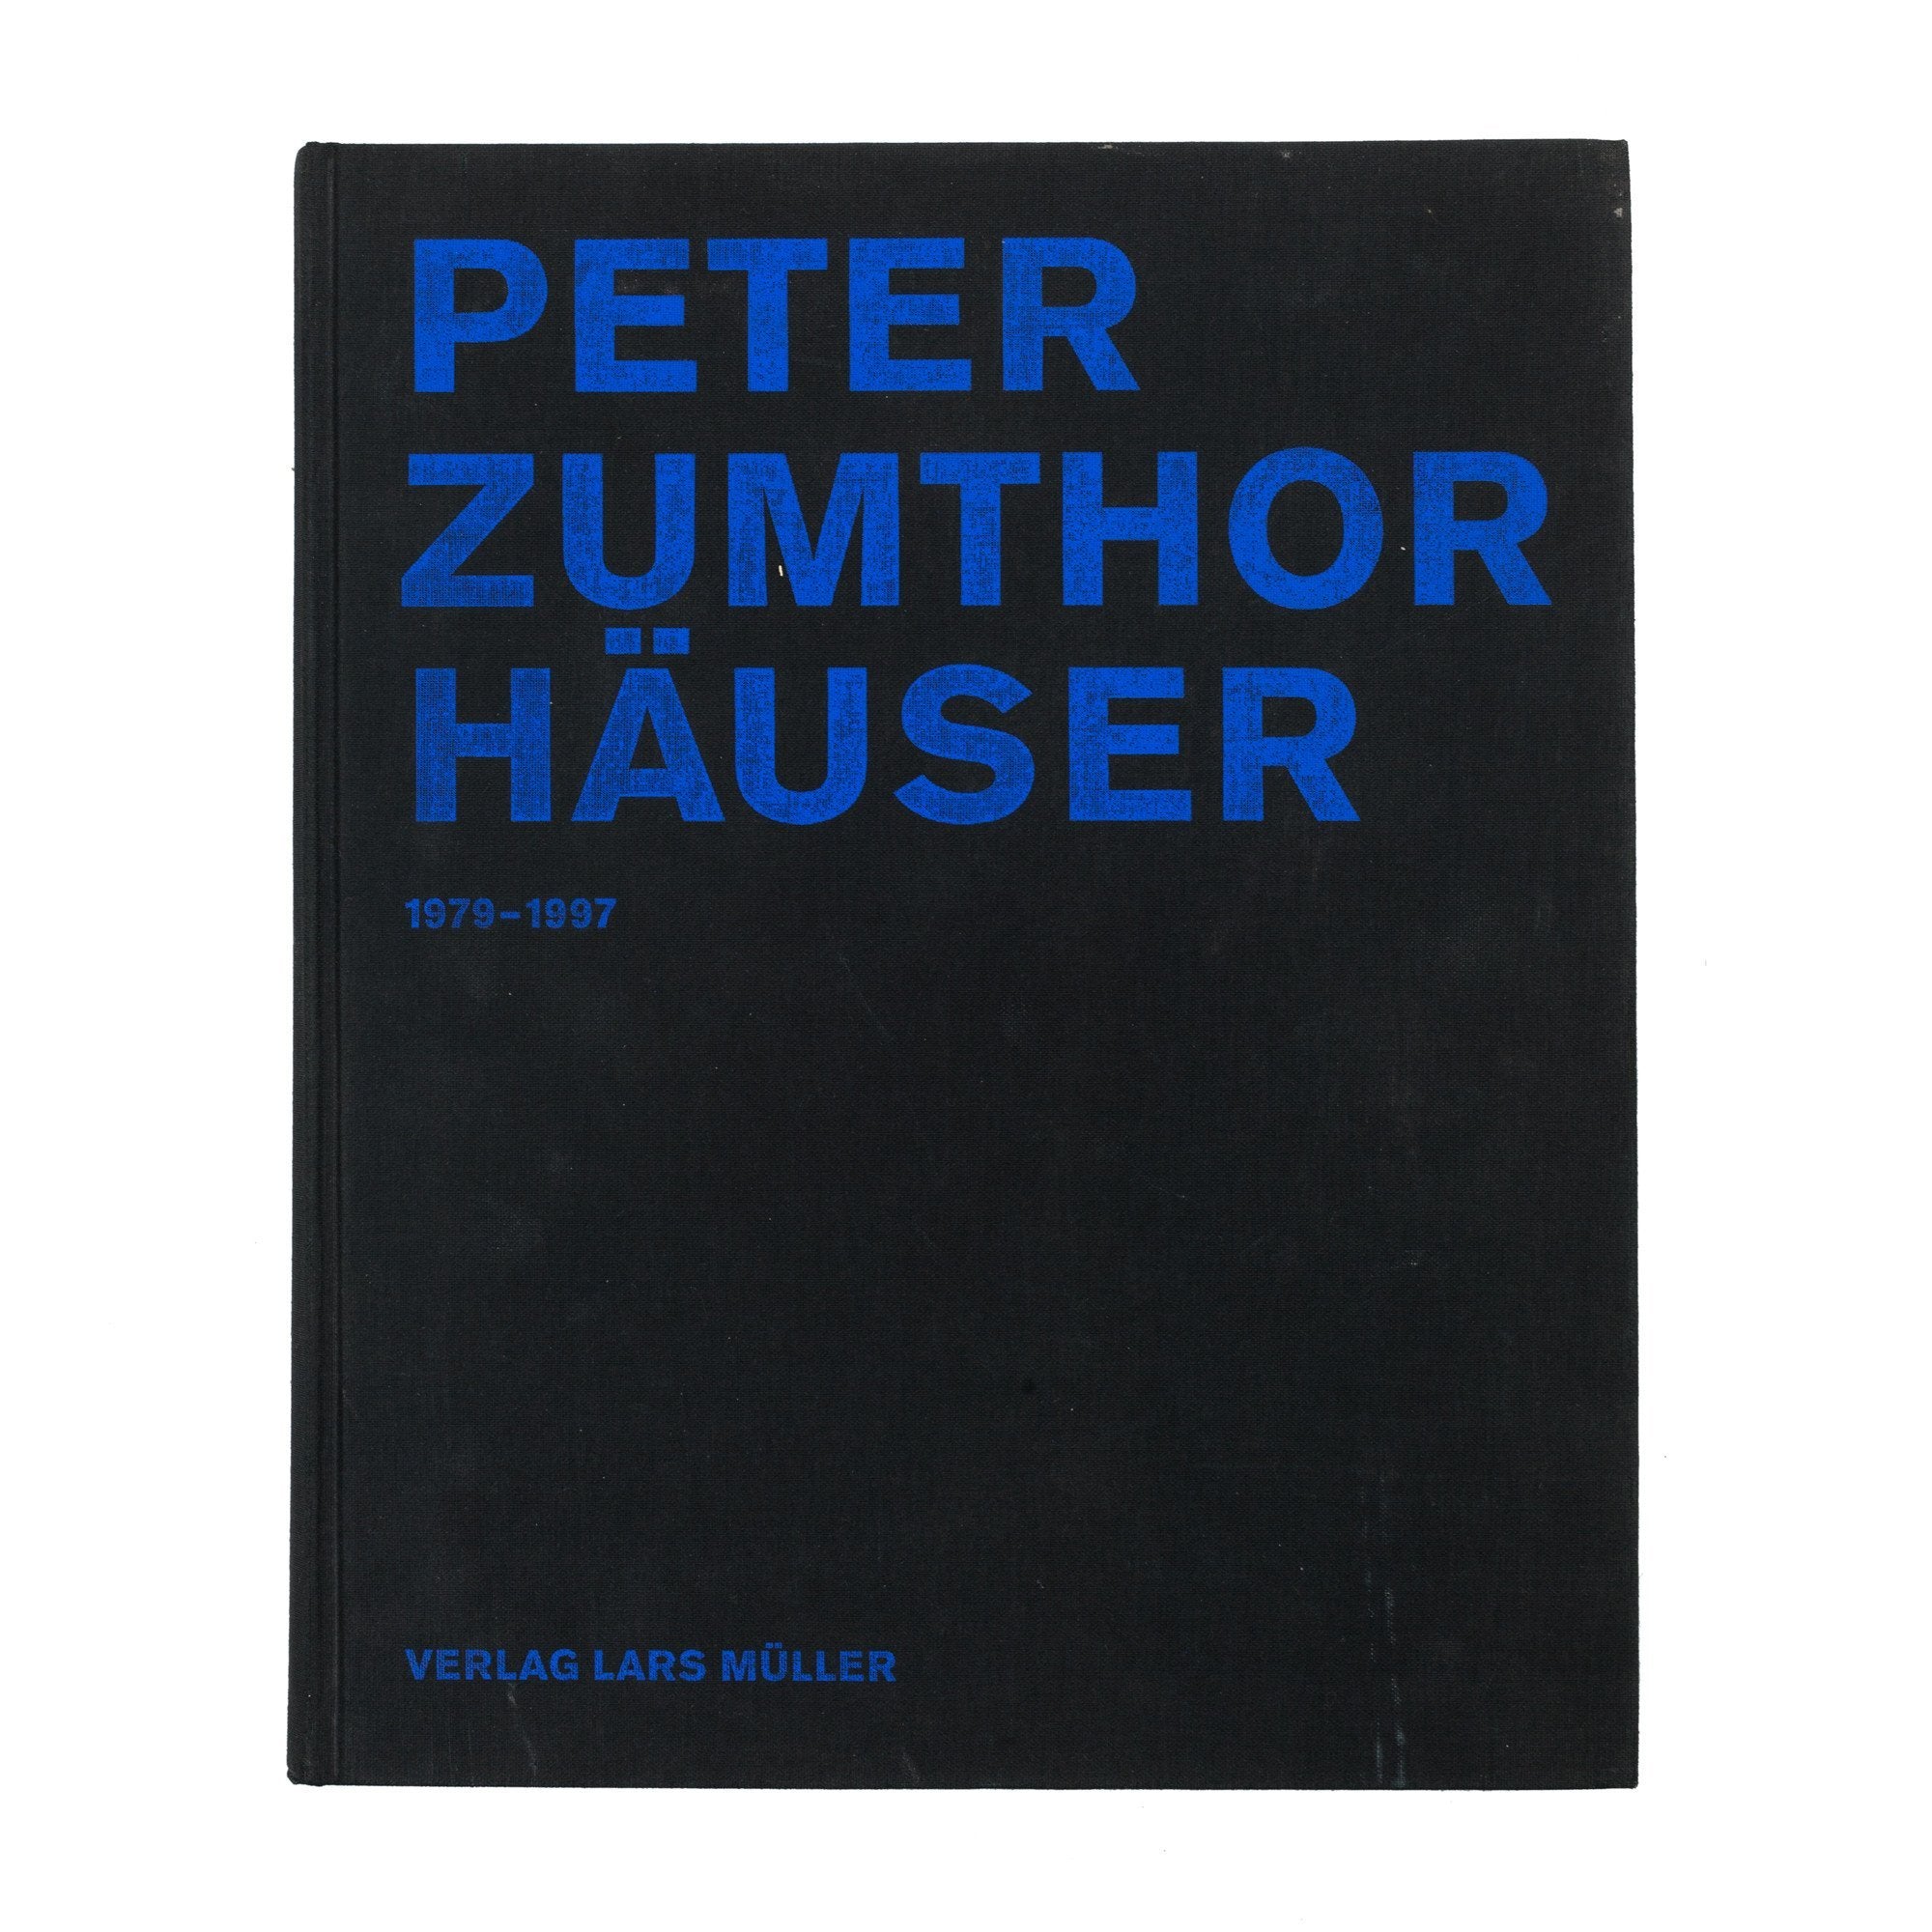 Häuser 1979-1997, Peter Zumthor, 1998 - ONEROOM